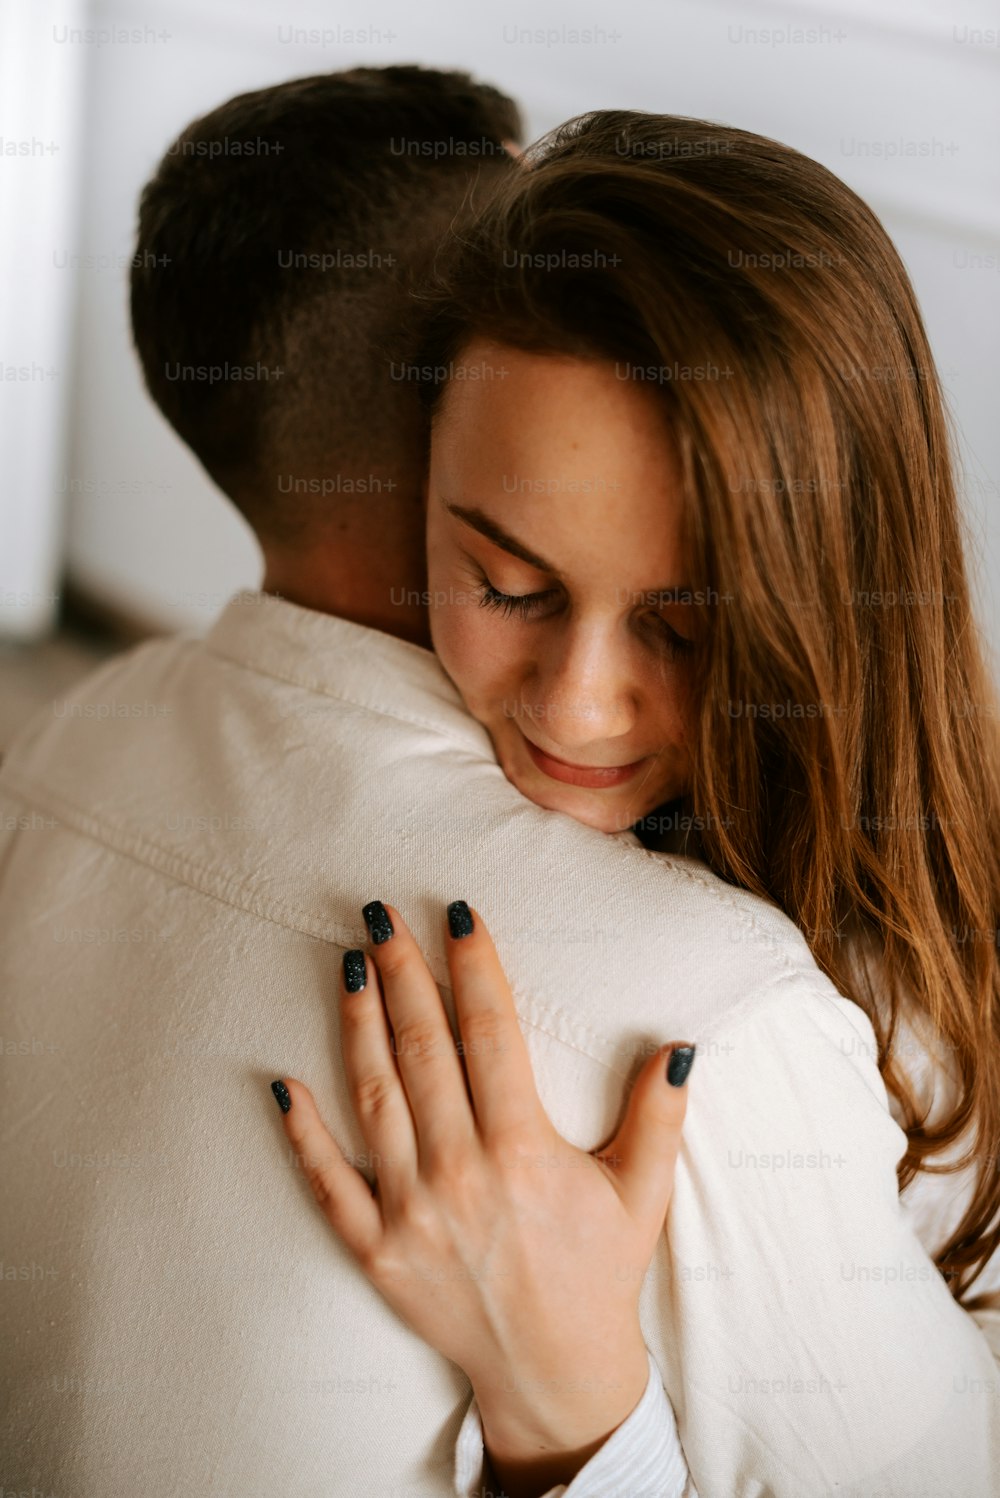 a woman hugging a man in a white shirt